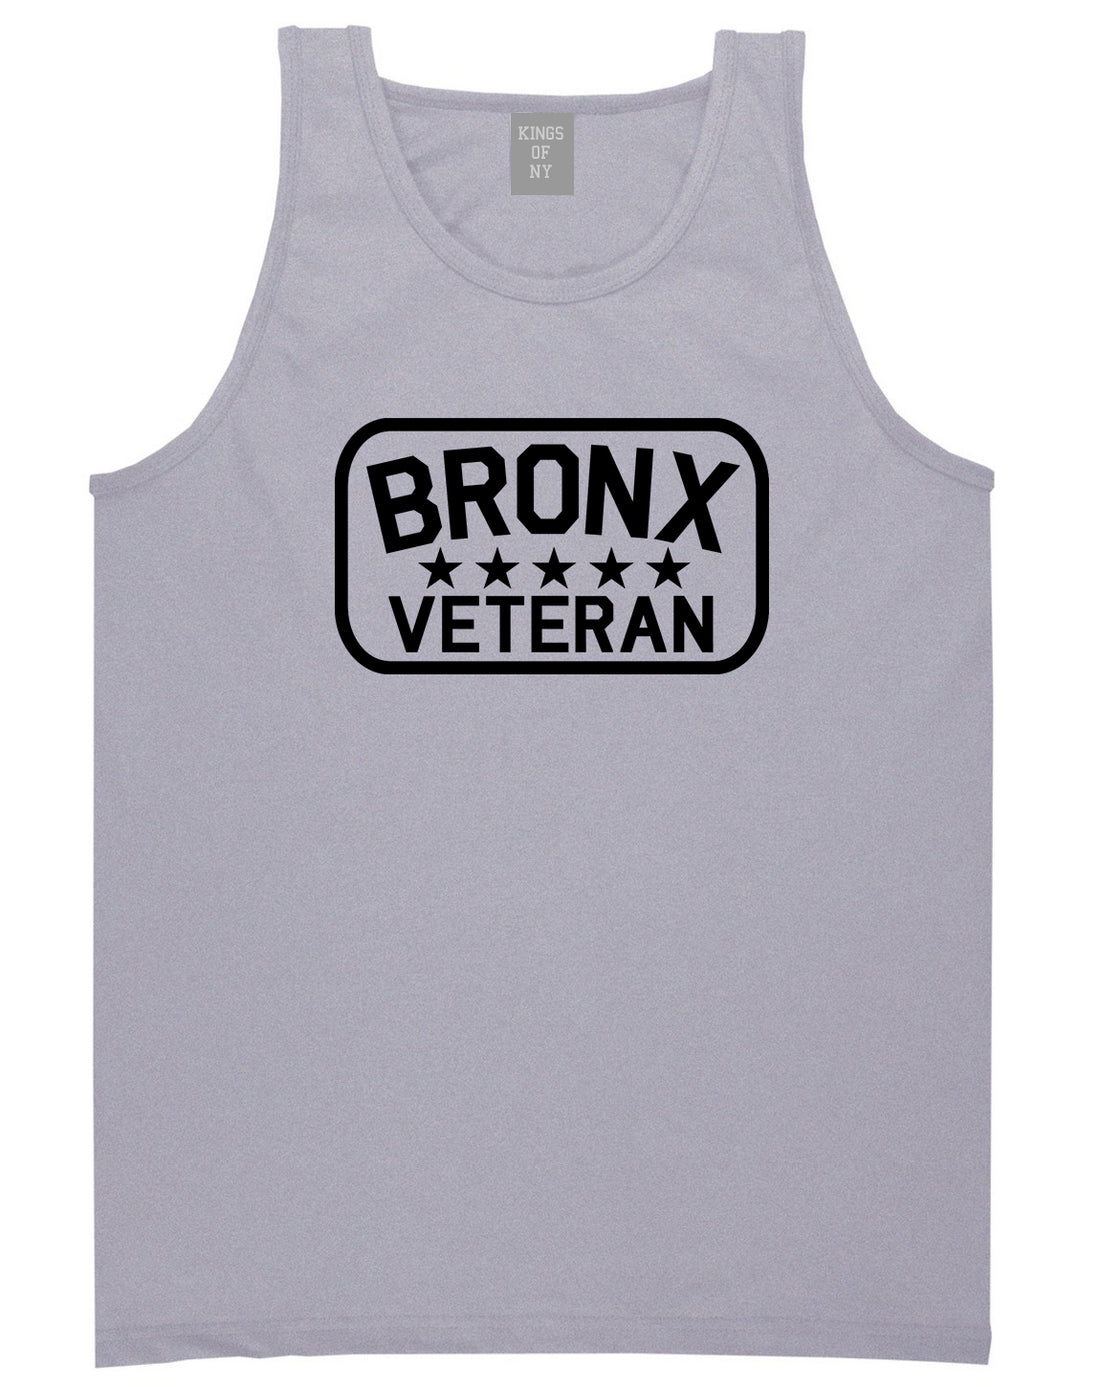 Bronx Veteran Mens Tank Top Shirt Grey